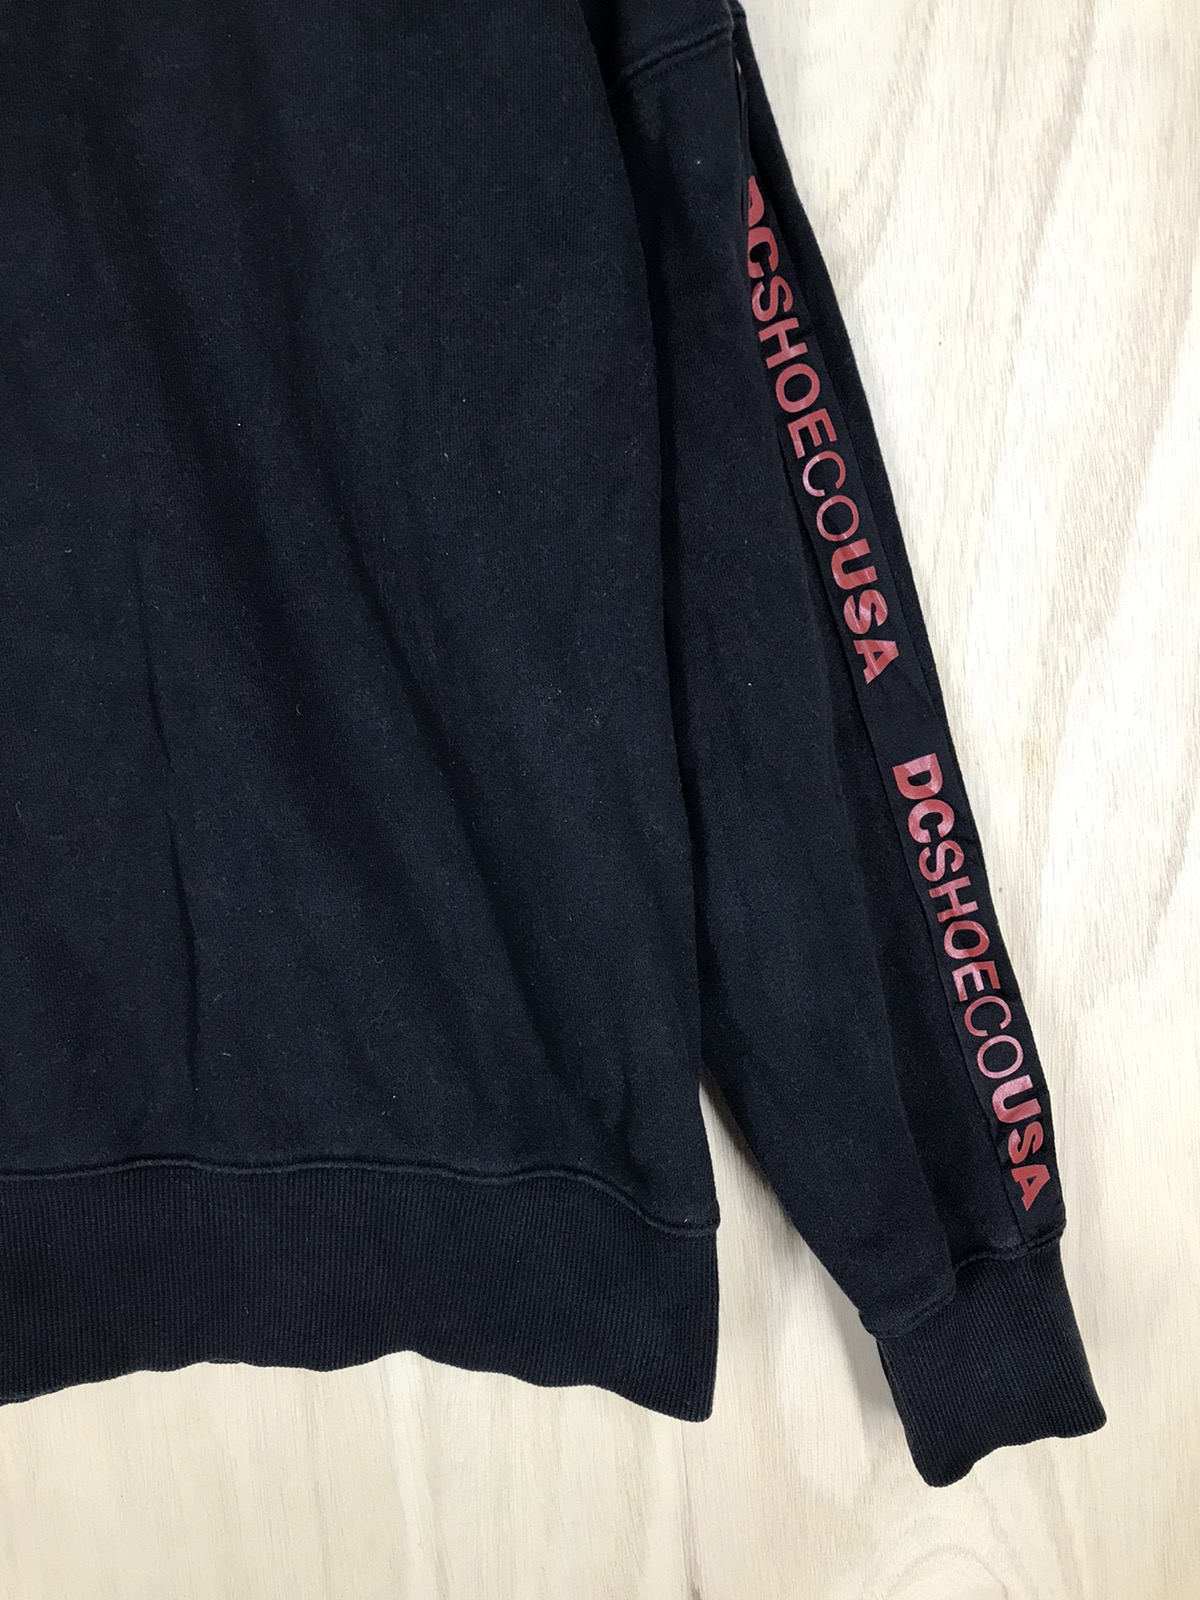 Dc - DCSHOECOUSA Sidetape Sweatshirts Fit to XL - 5